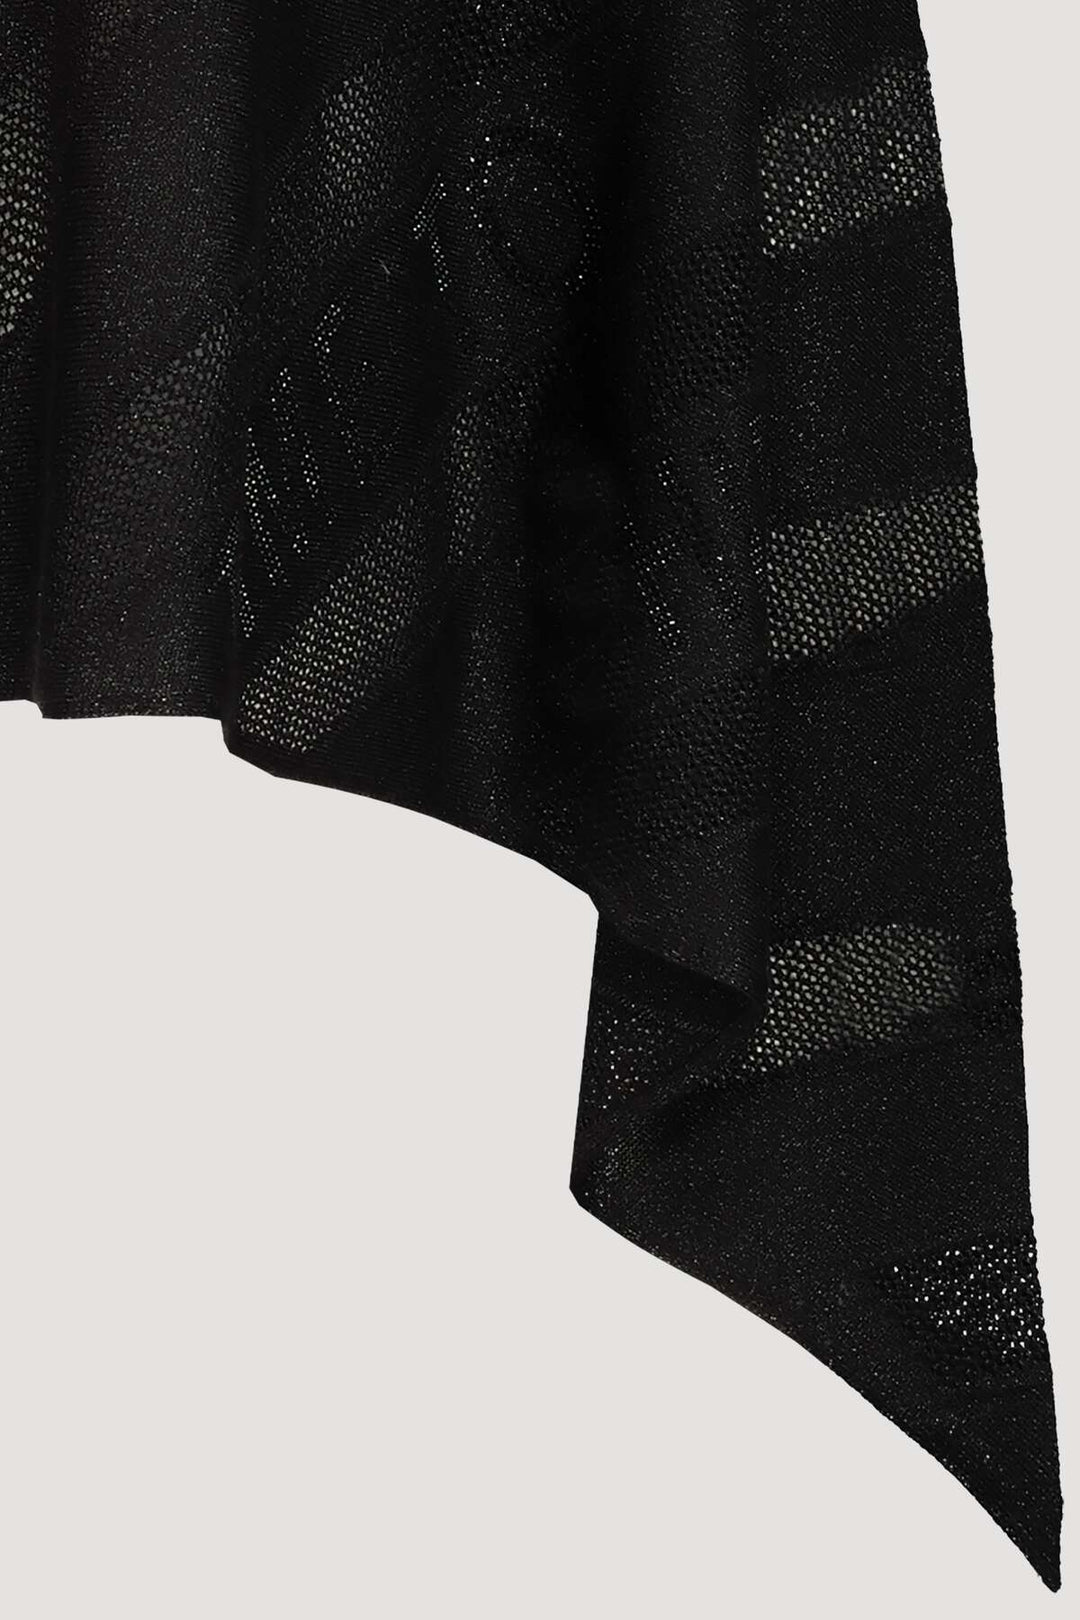 Monari 406595 Black Ajour Knit Poncho with Lurex Detail | Dotique